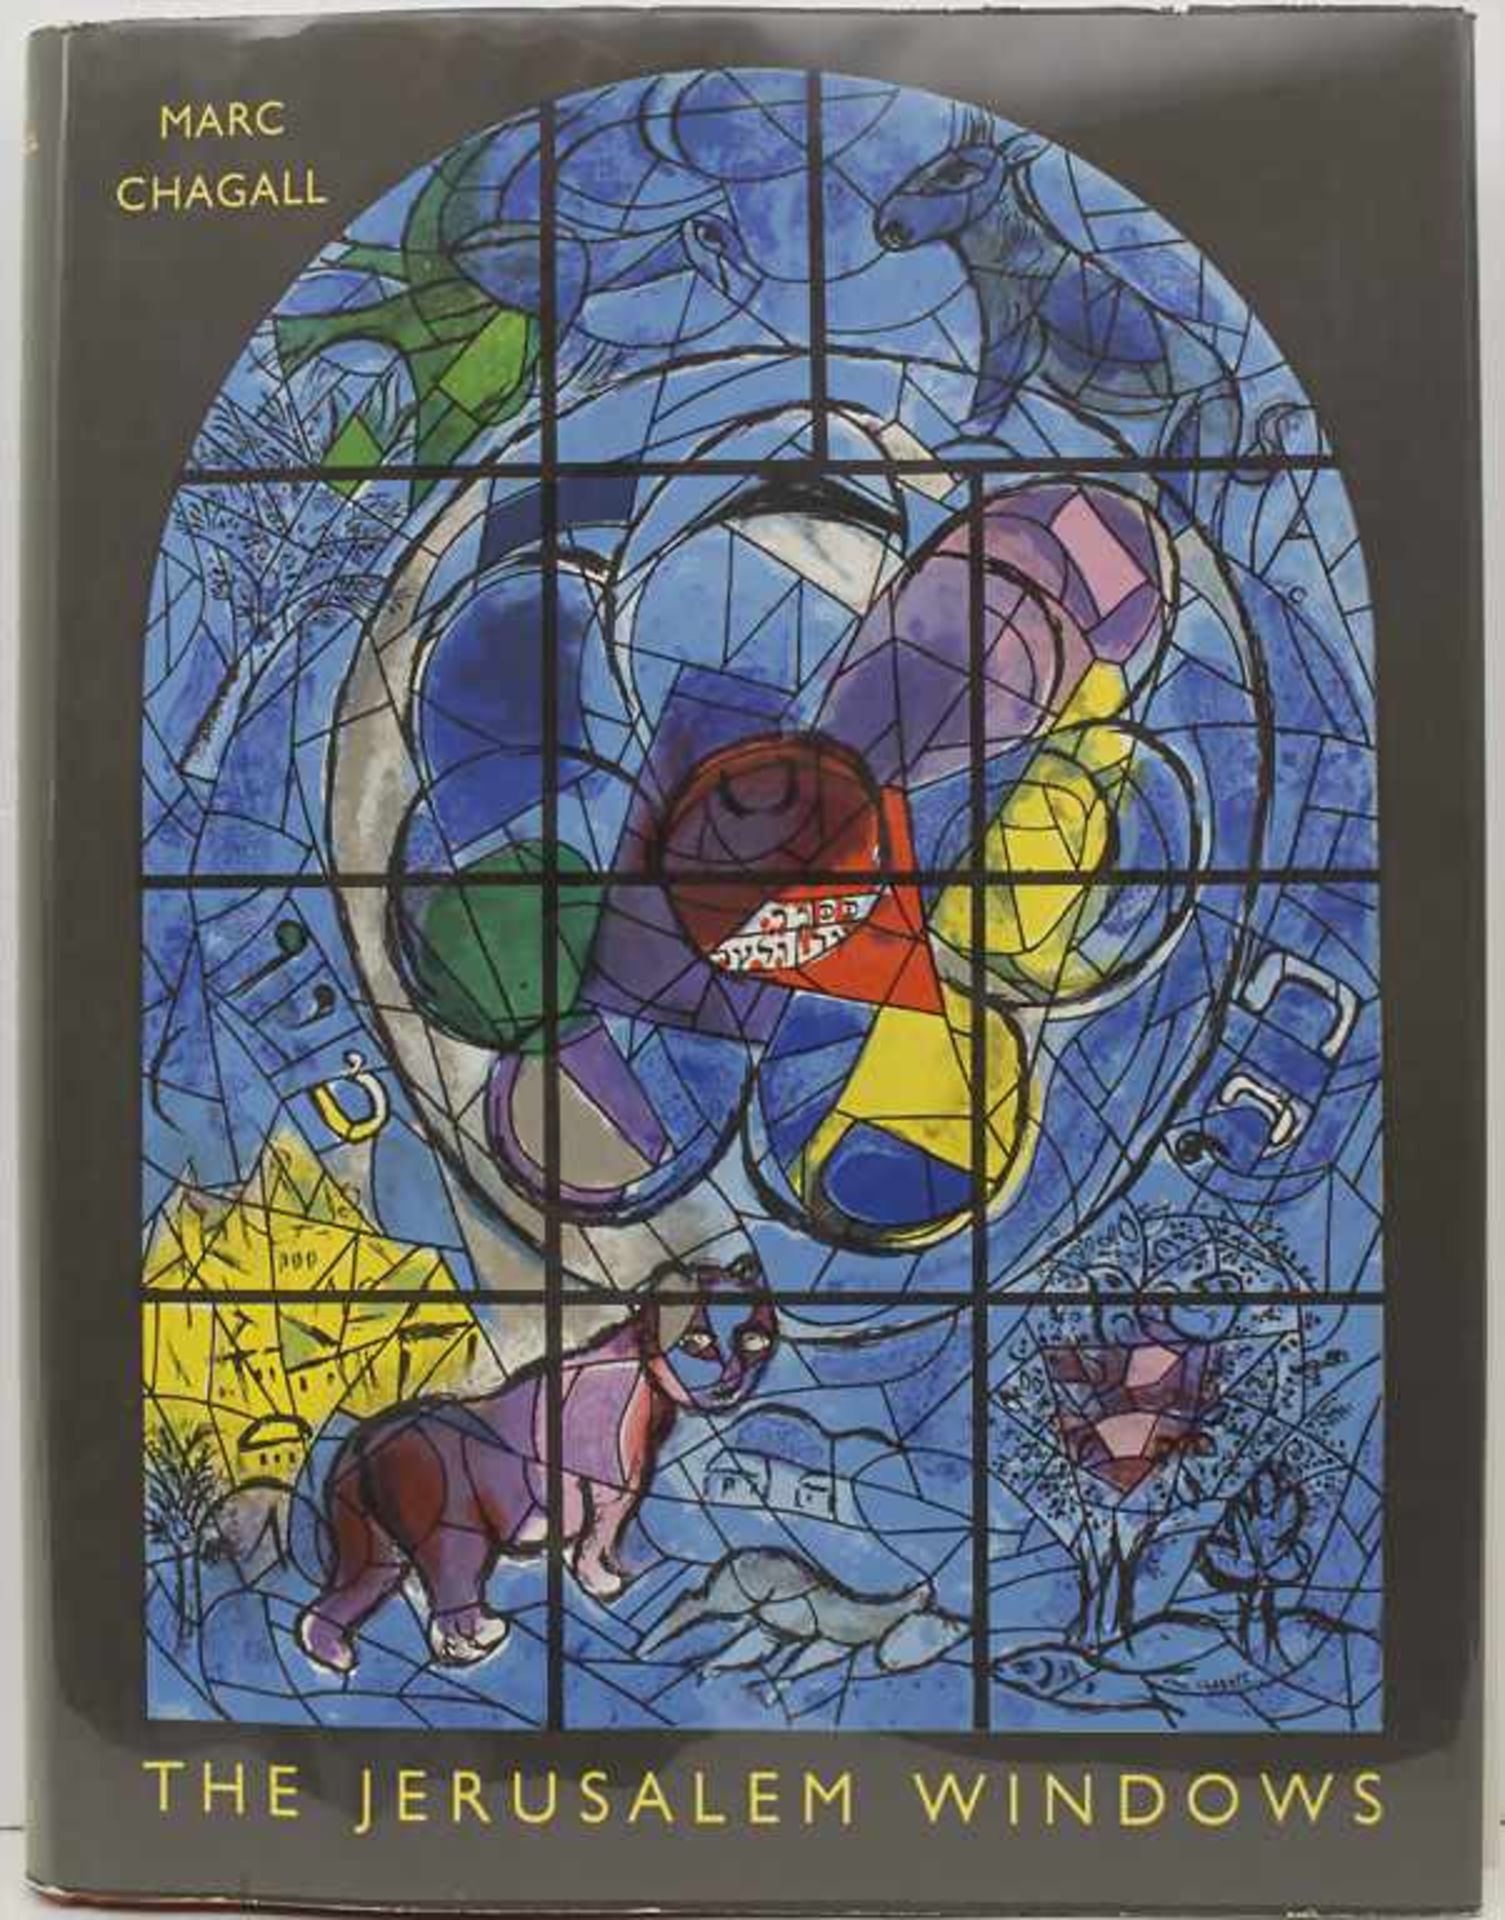 George Braziller (Hg): Marc Chagall - The Jerusalem windows